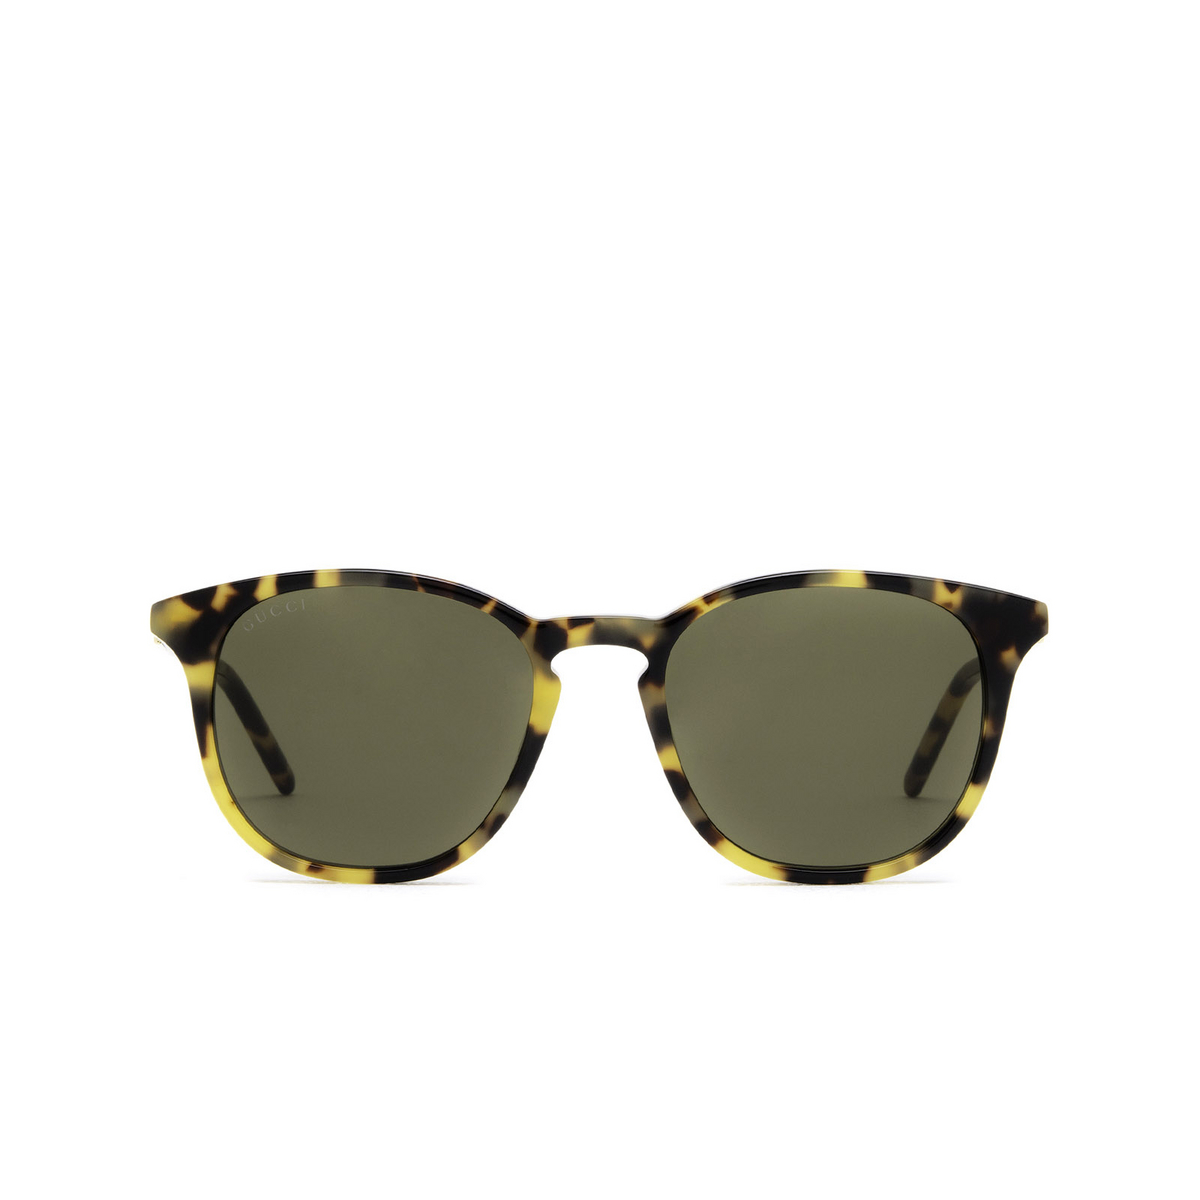 Gucci® Round Sunglasses: GG1157S color Havana 003 - front view.